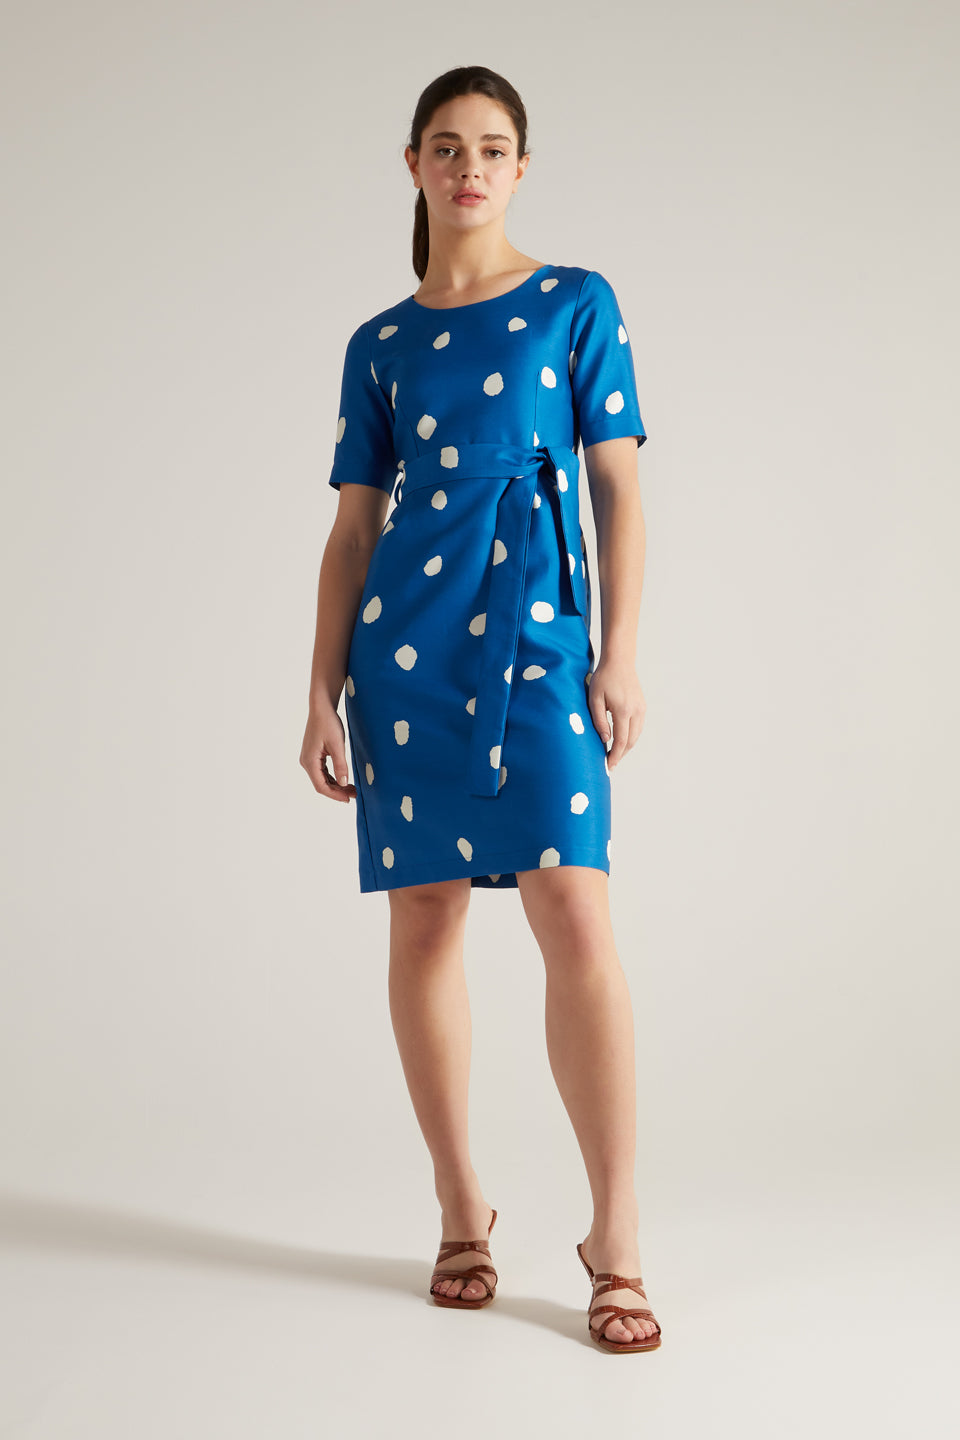 Elora Dress - SAMPLE - Size 0